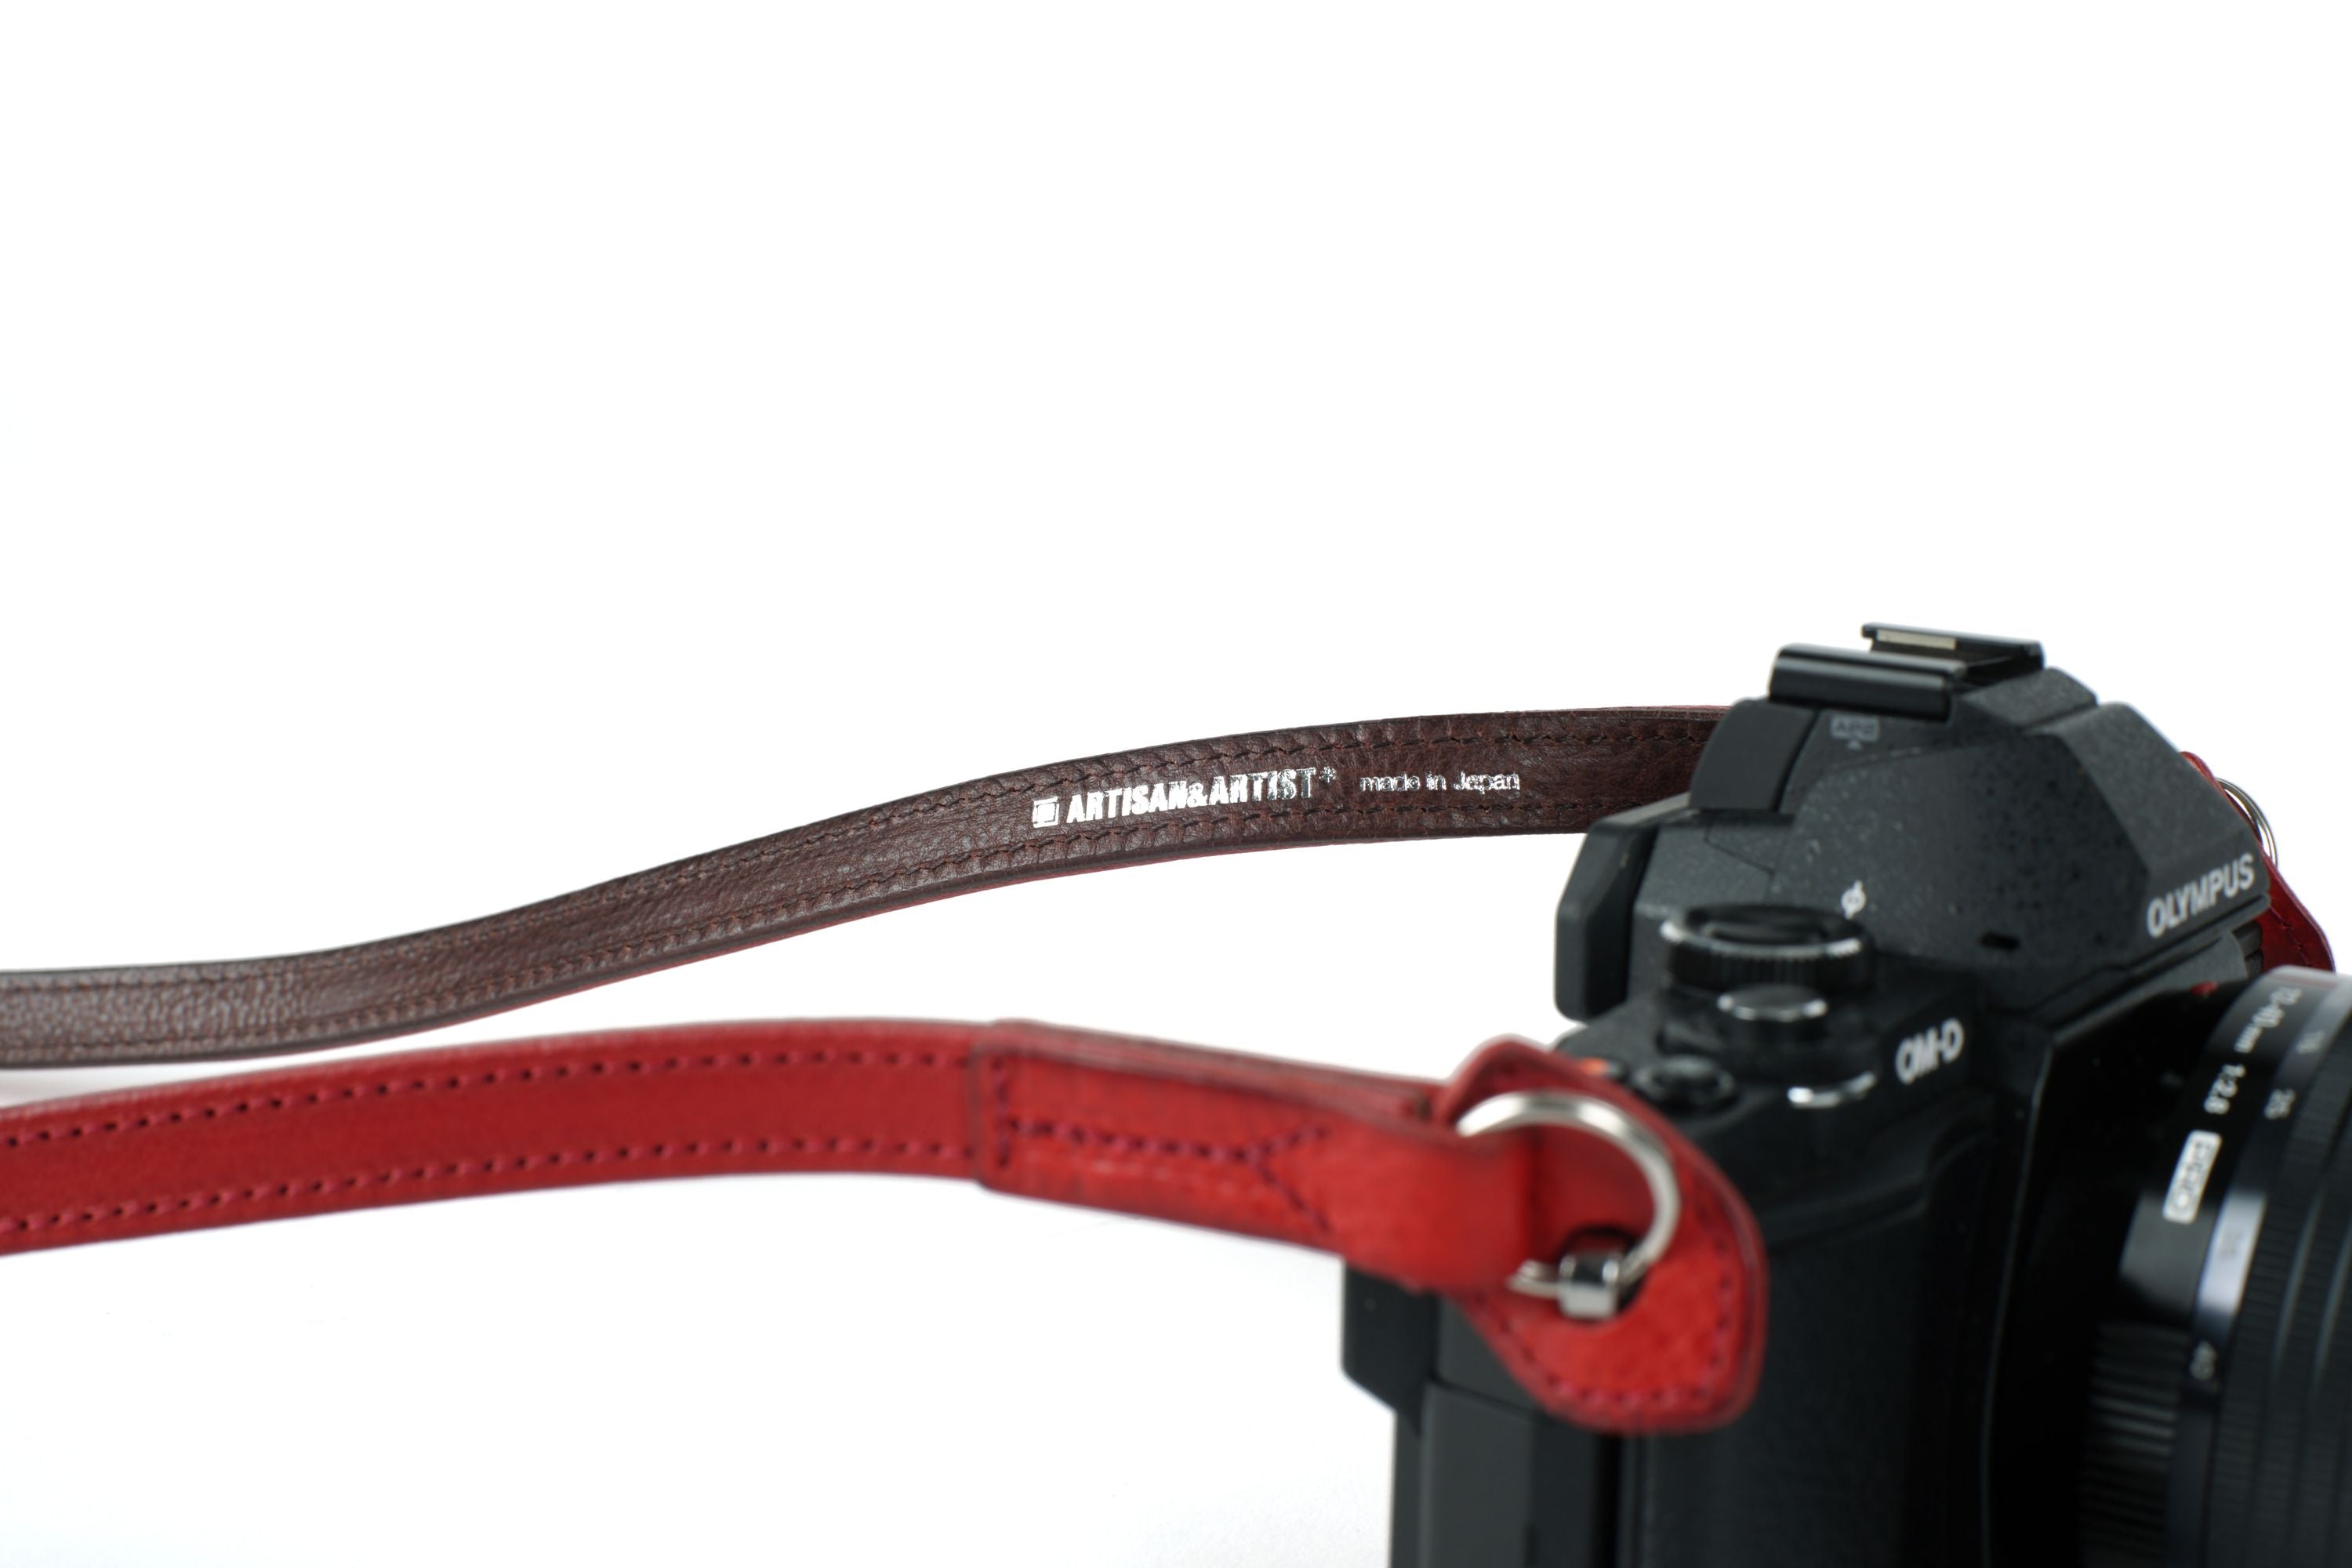 ACAM-280L Leather Camera Strap (Longer Length)